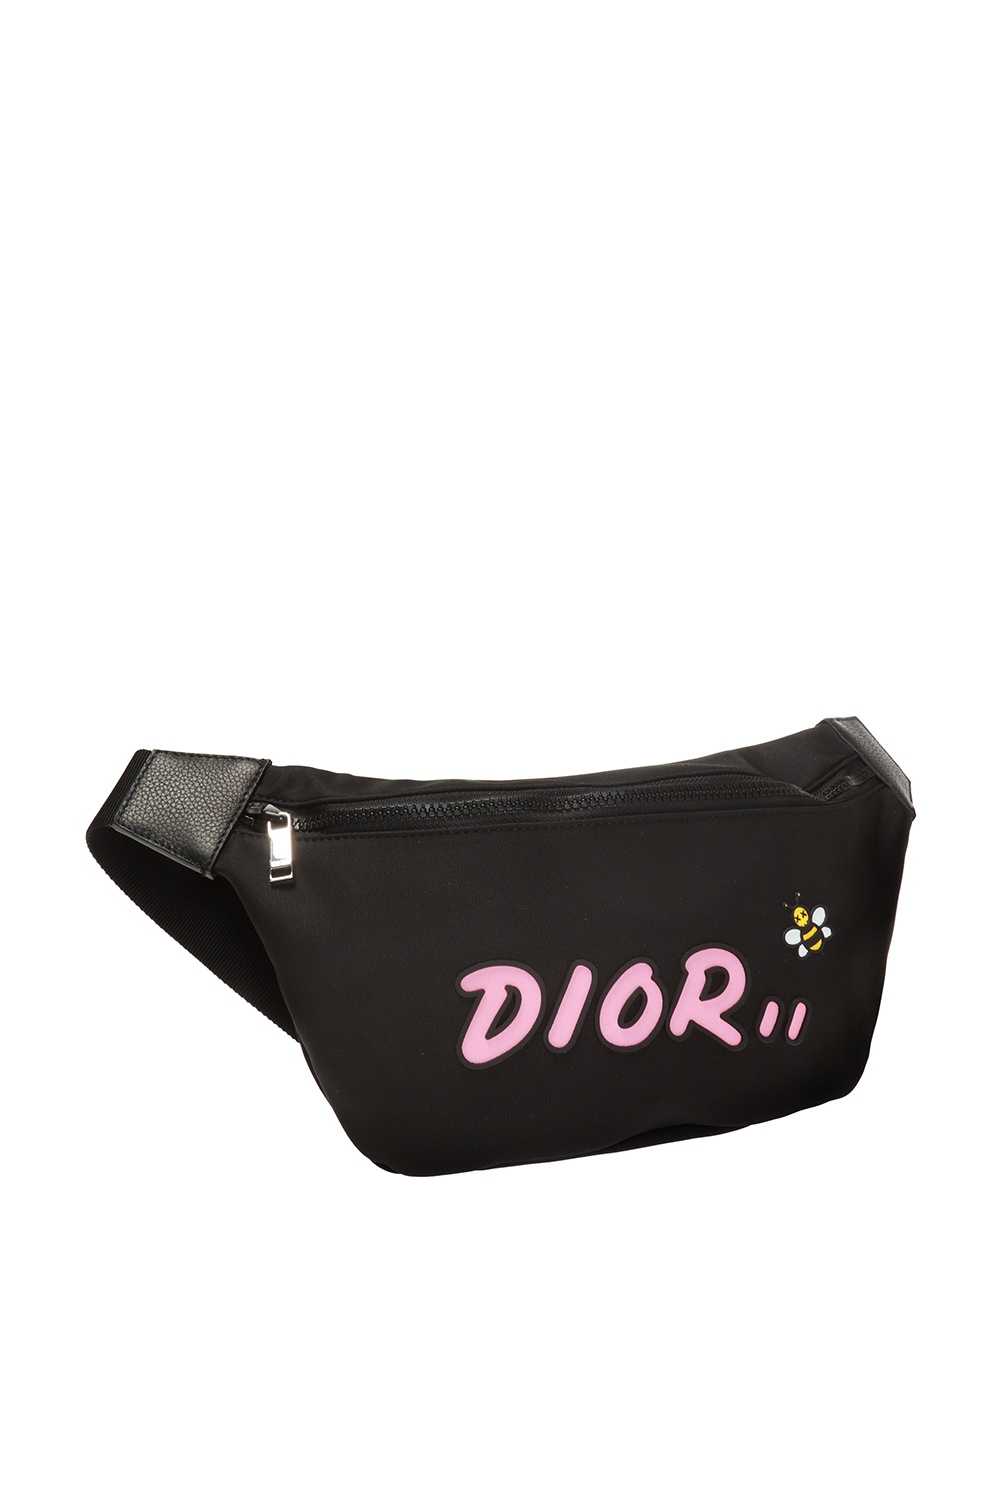 Dior x Kaws Dior - Vitkac HK